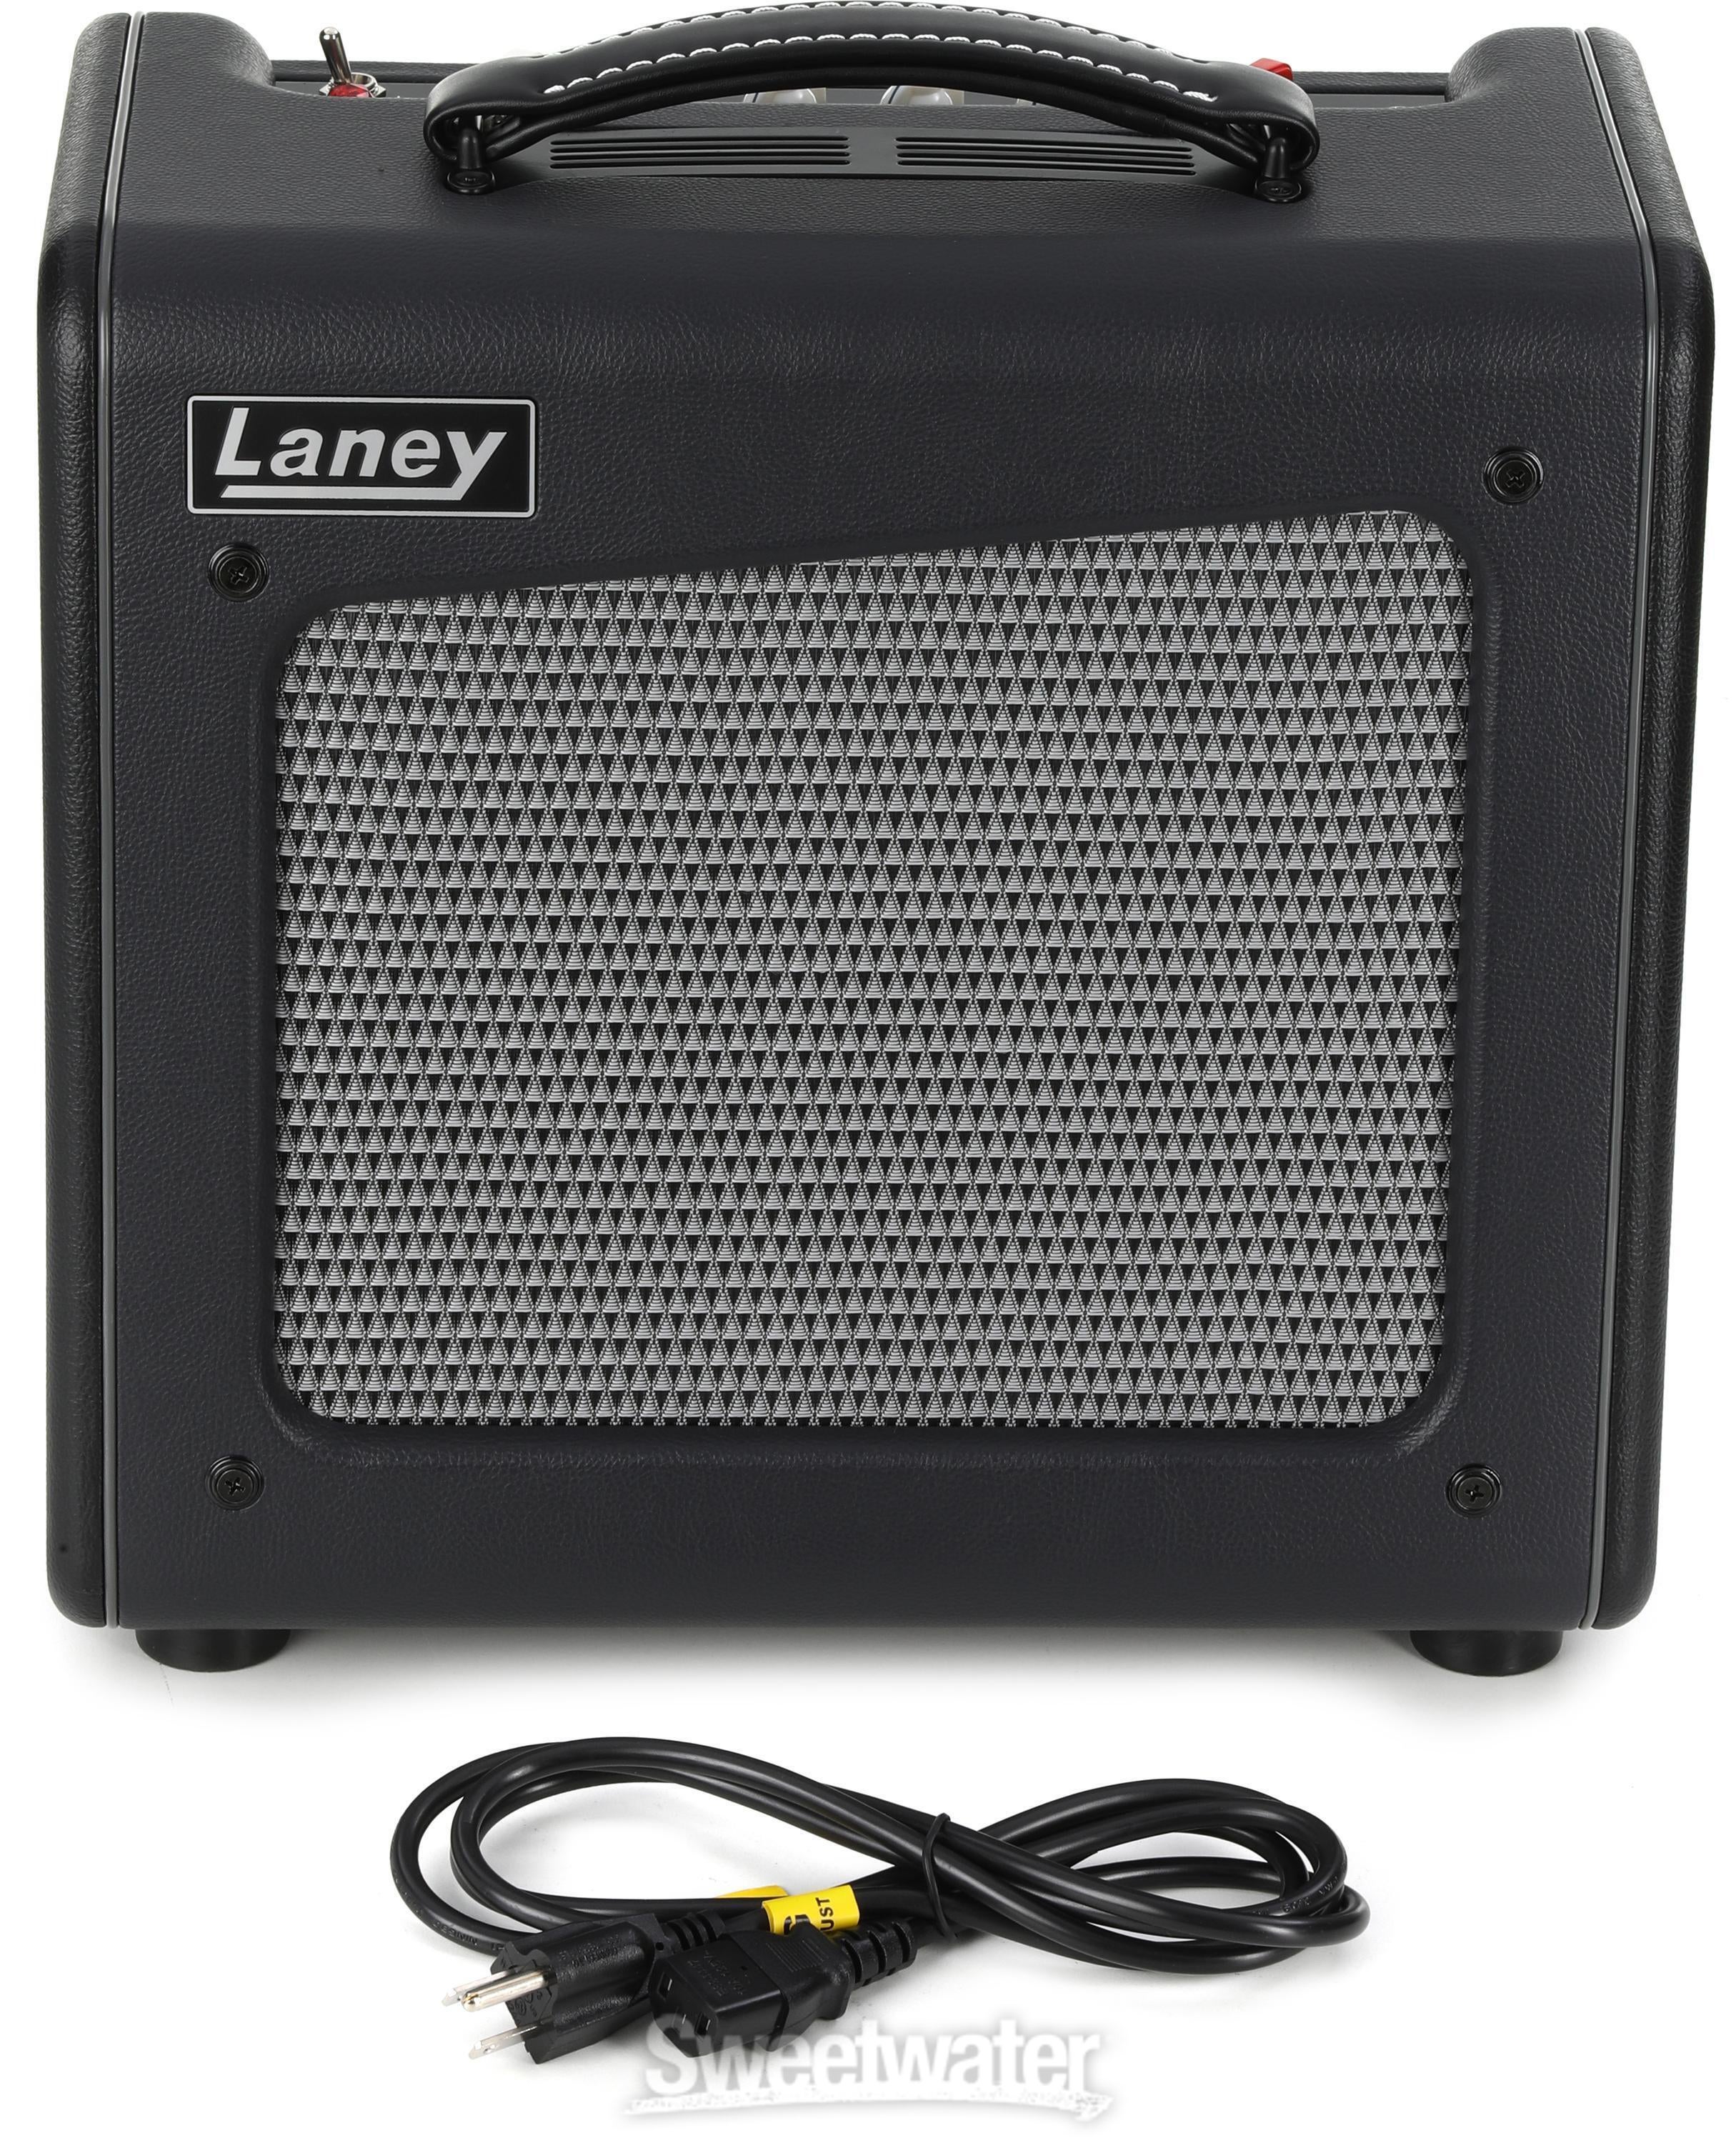 Laney Cub-Super10 6-watt 1 x 10-inch Guitar Combo Amplifier